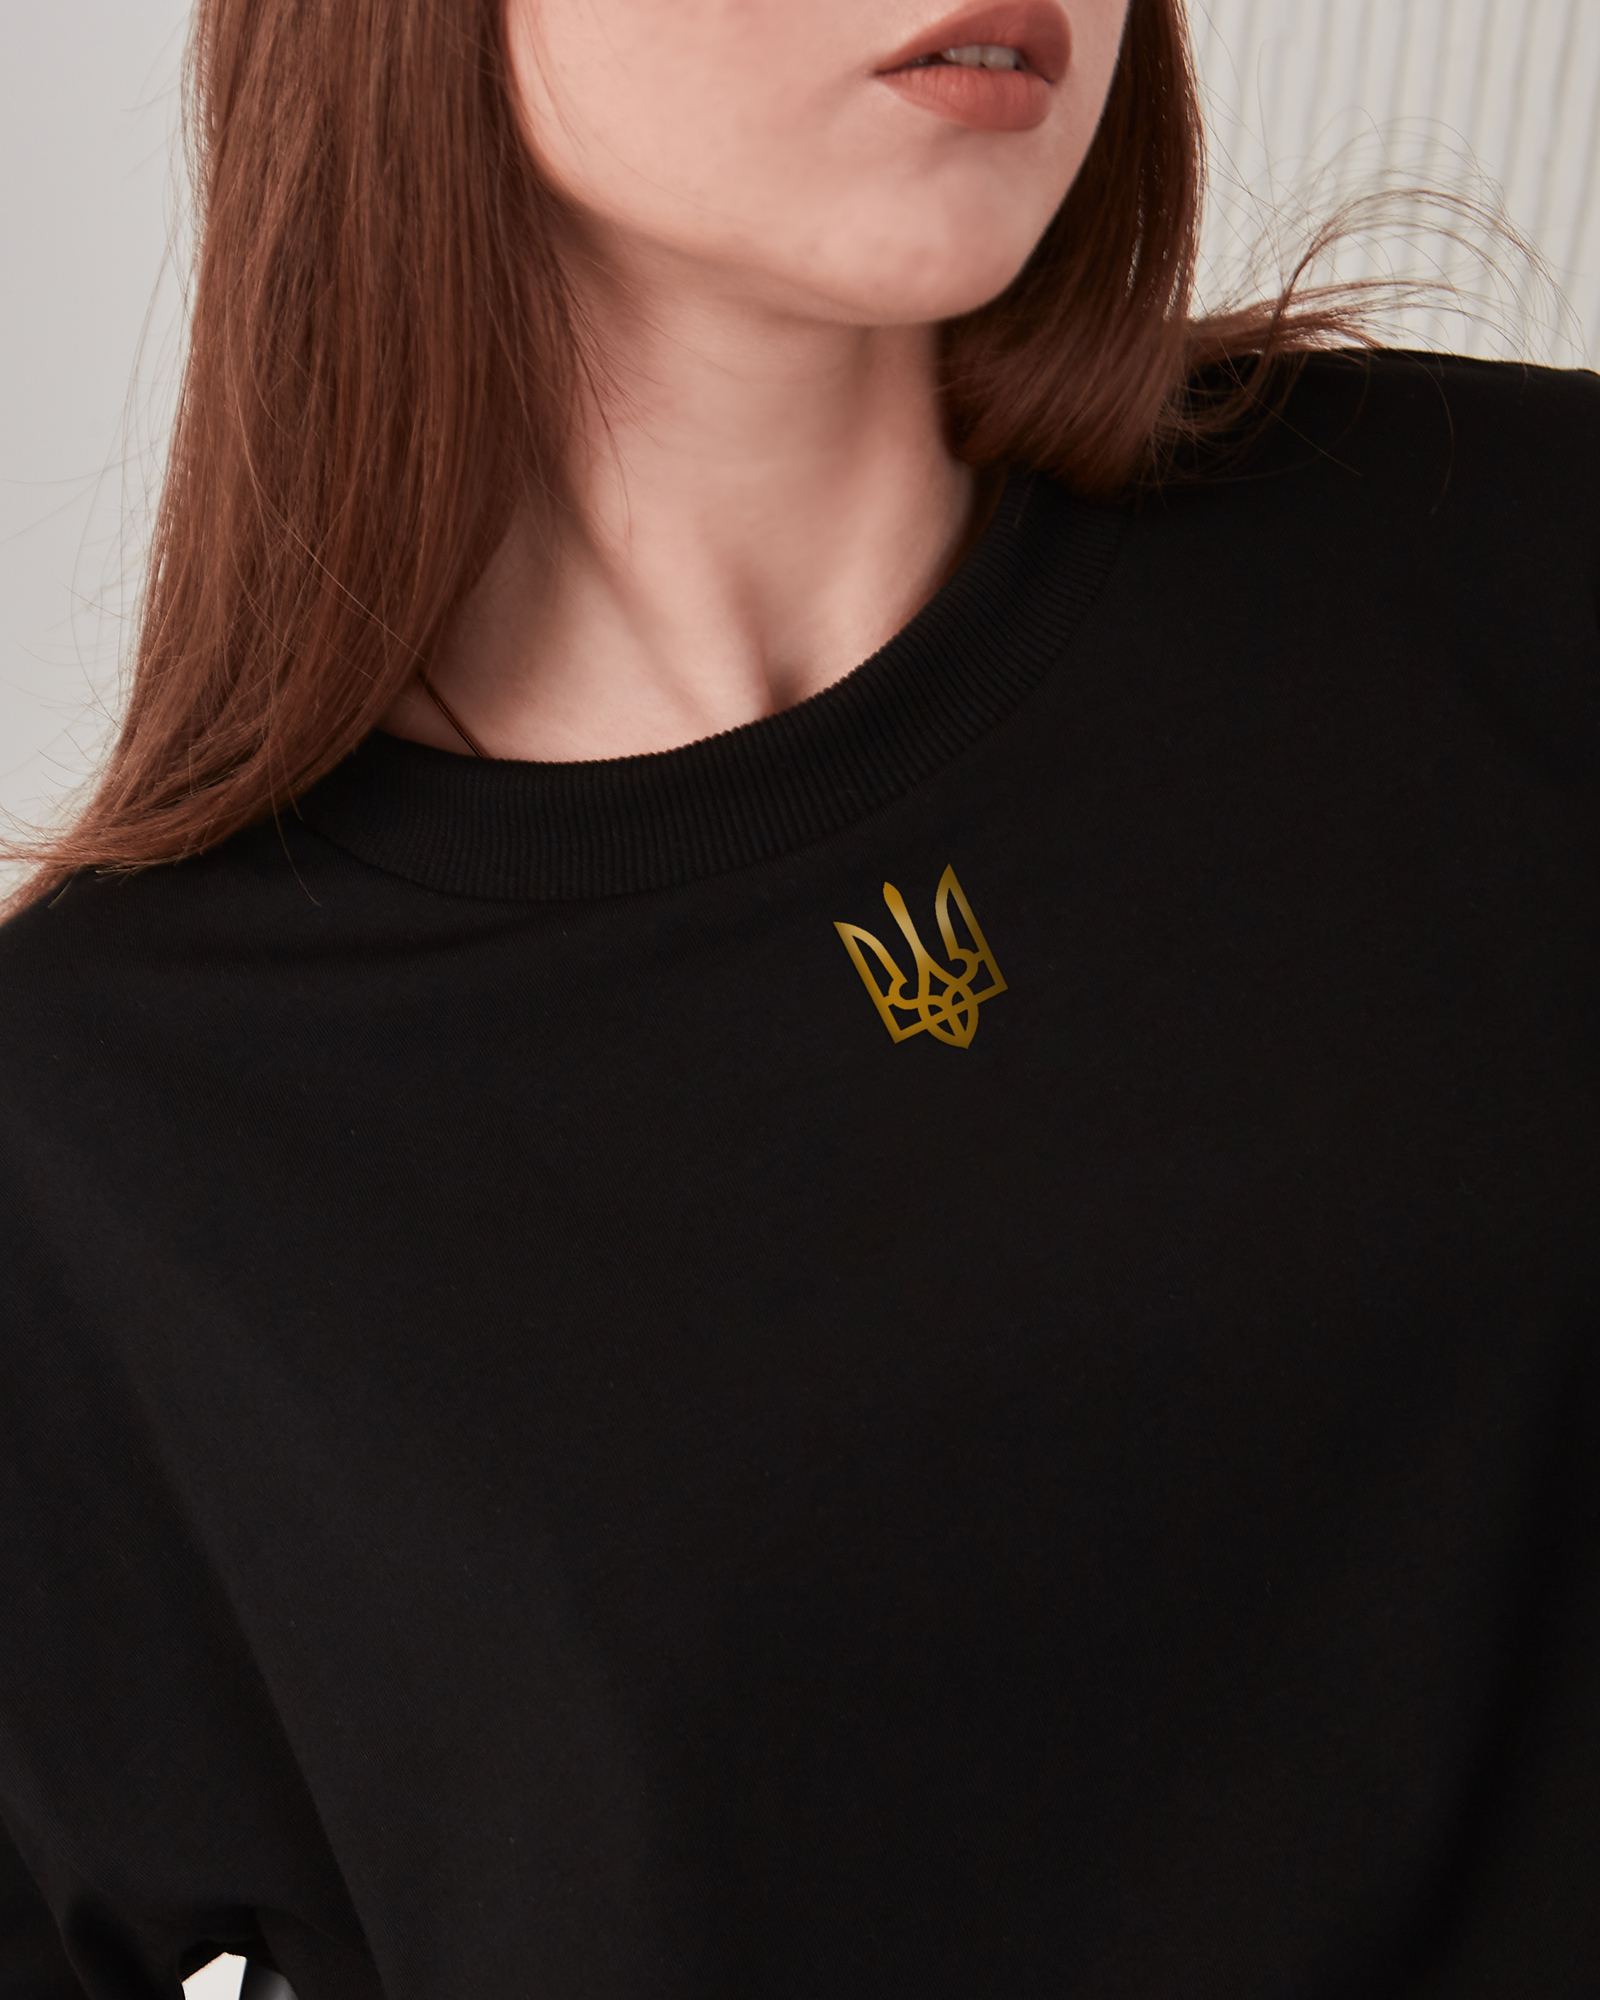 T-shirt black women gold Uangels Coat of Arms Spirit of Freedom with Ukrainian Symbolic